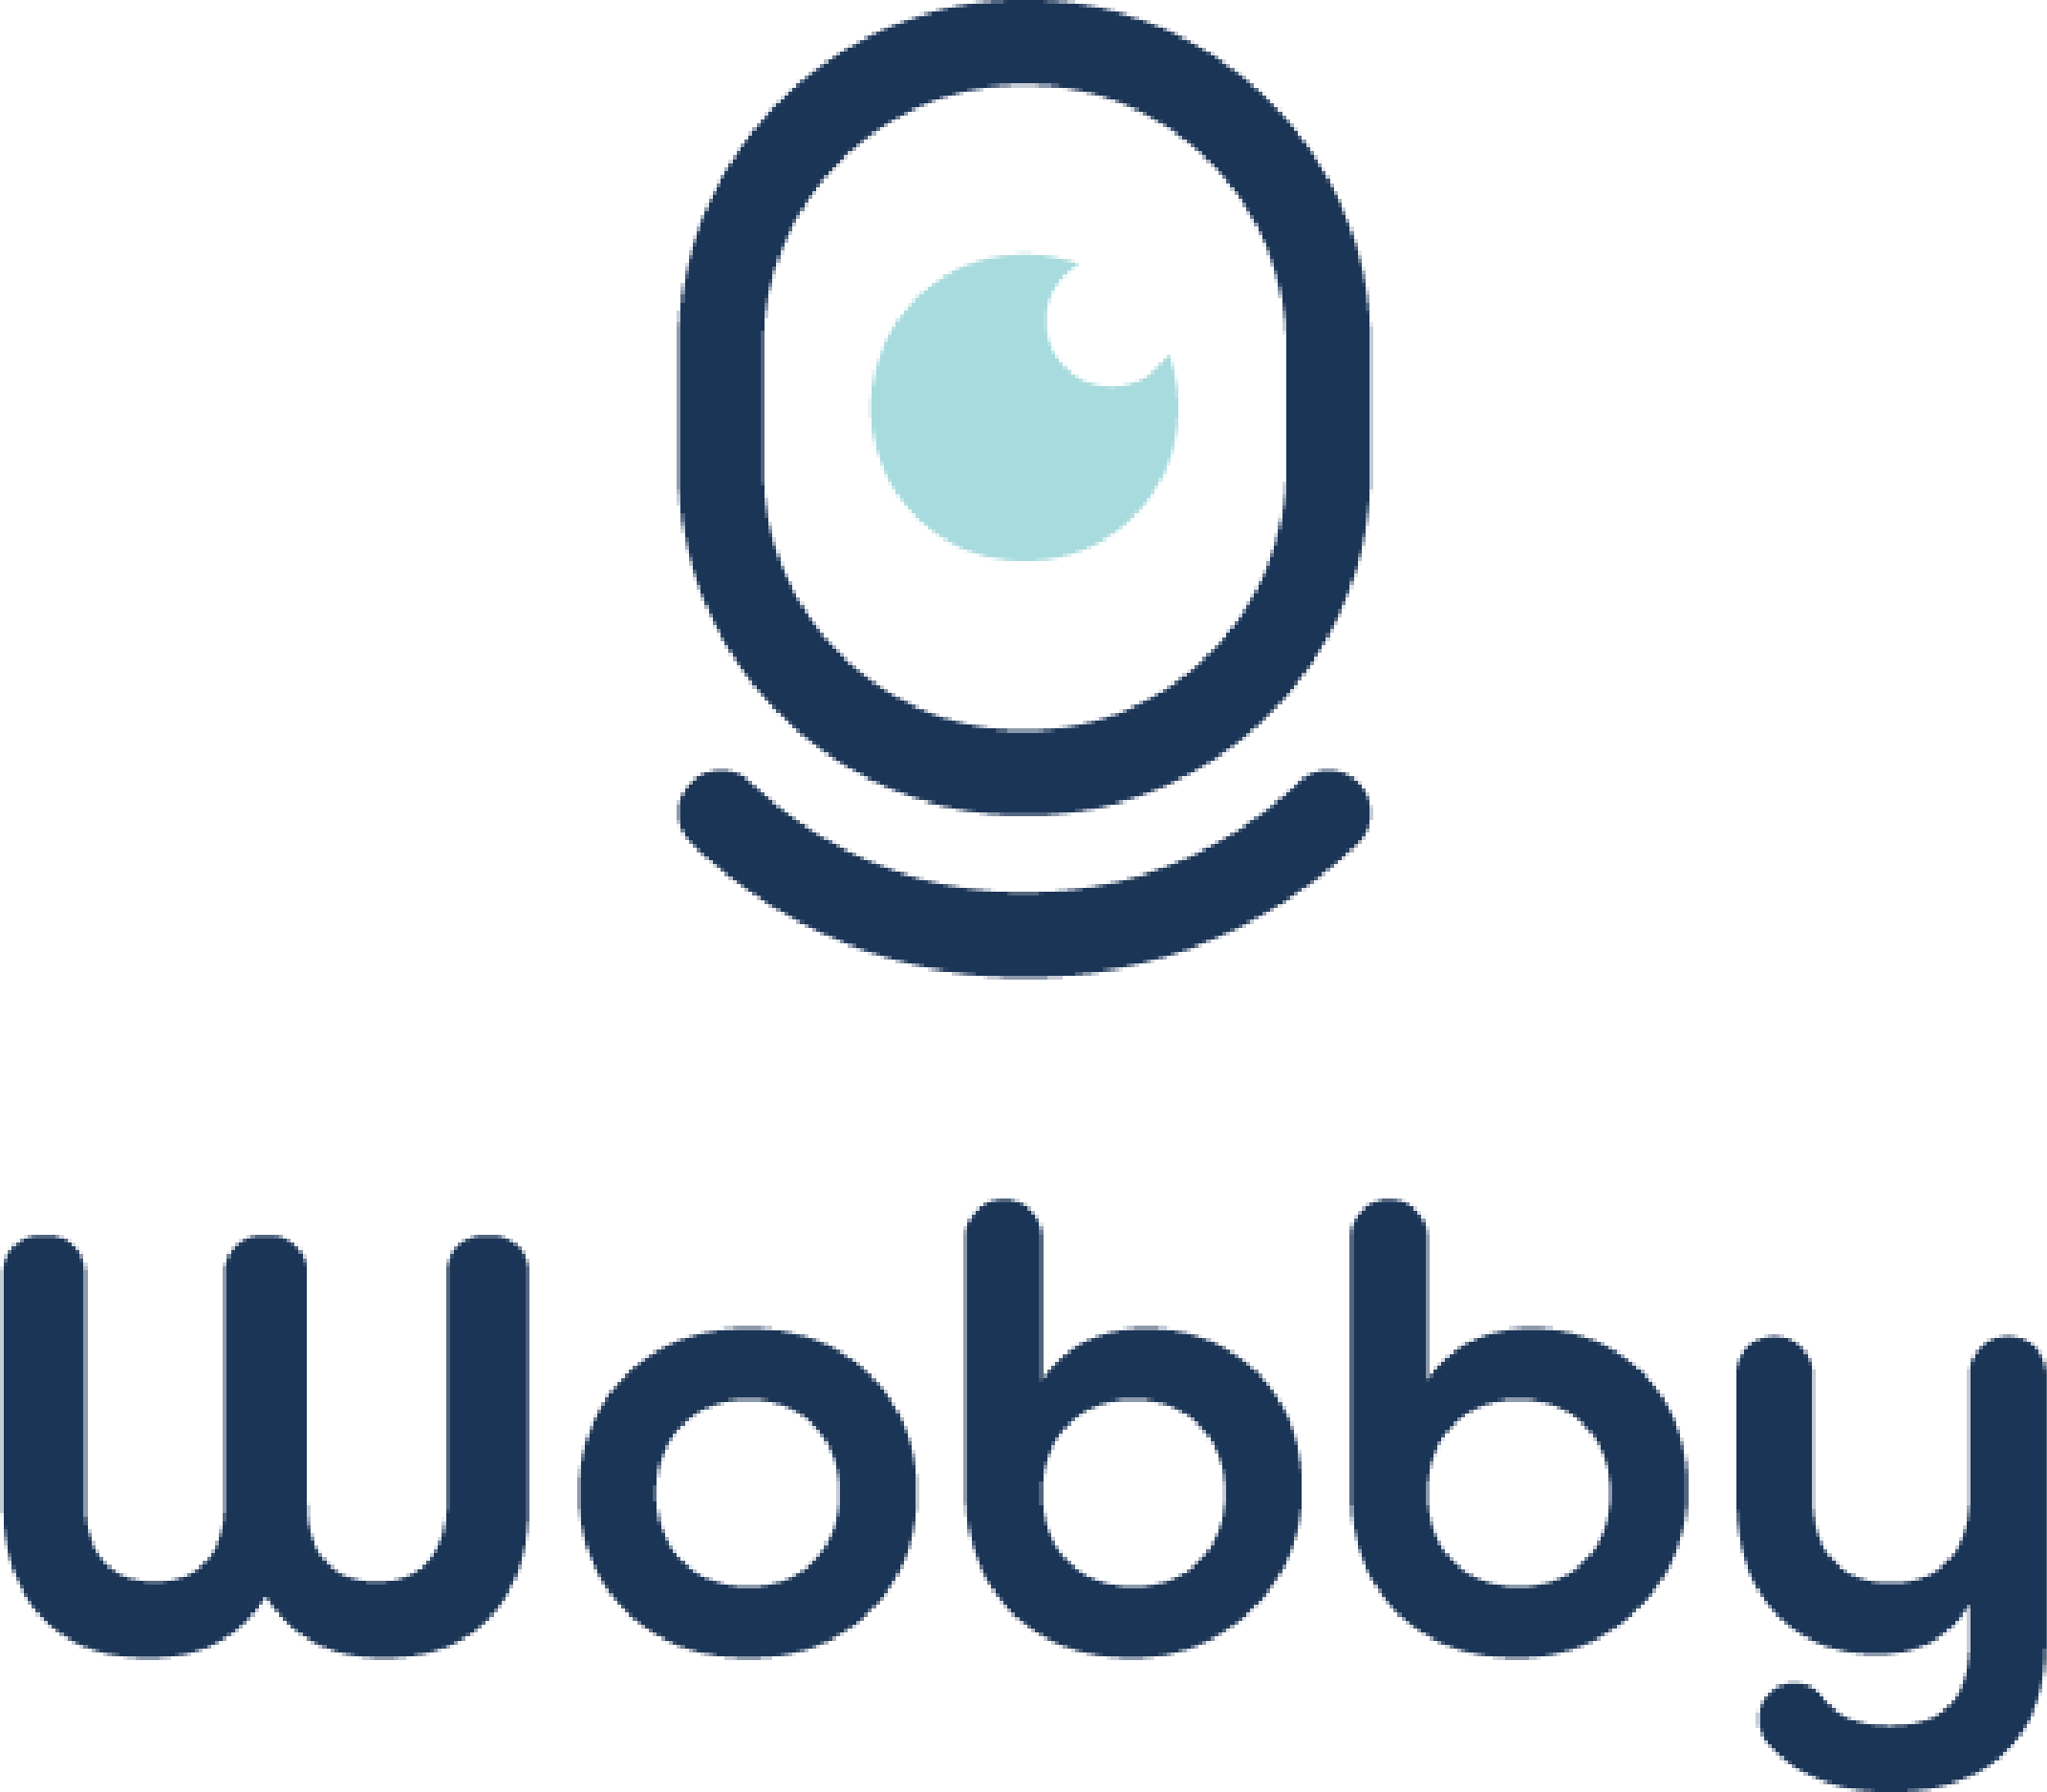 Wobby